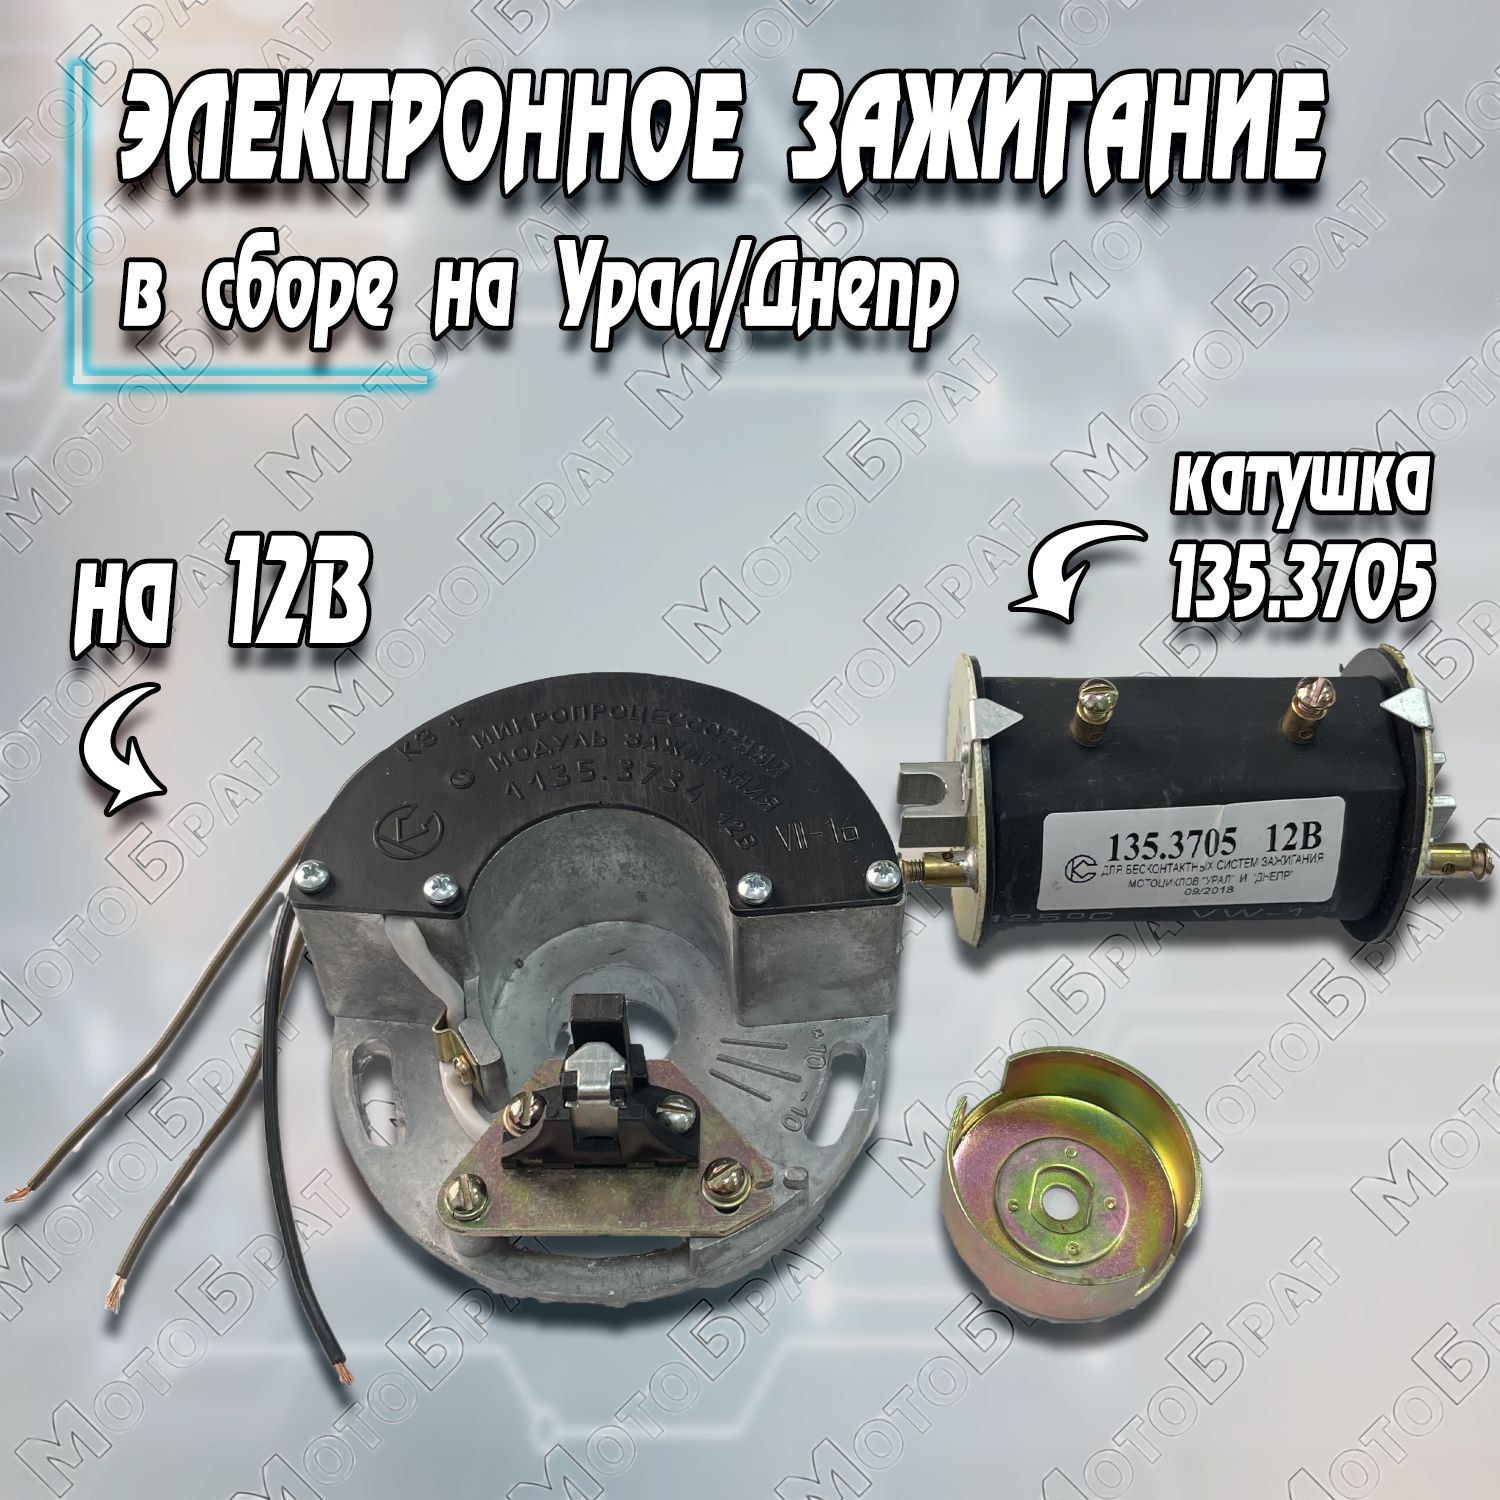 Шторка - модулятор зажигания под БСЗС на мотоцикл Урал, Днепр.